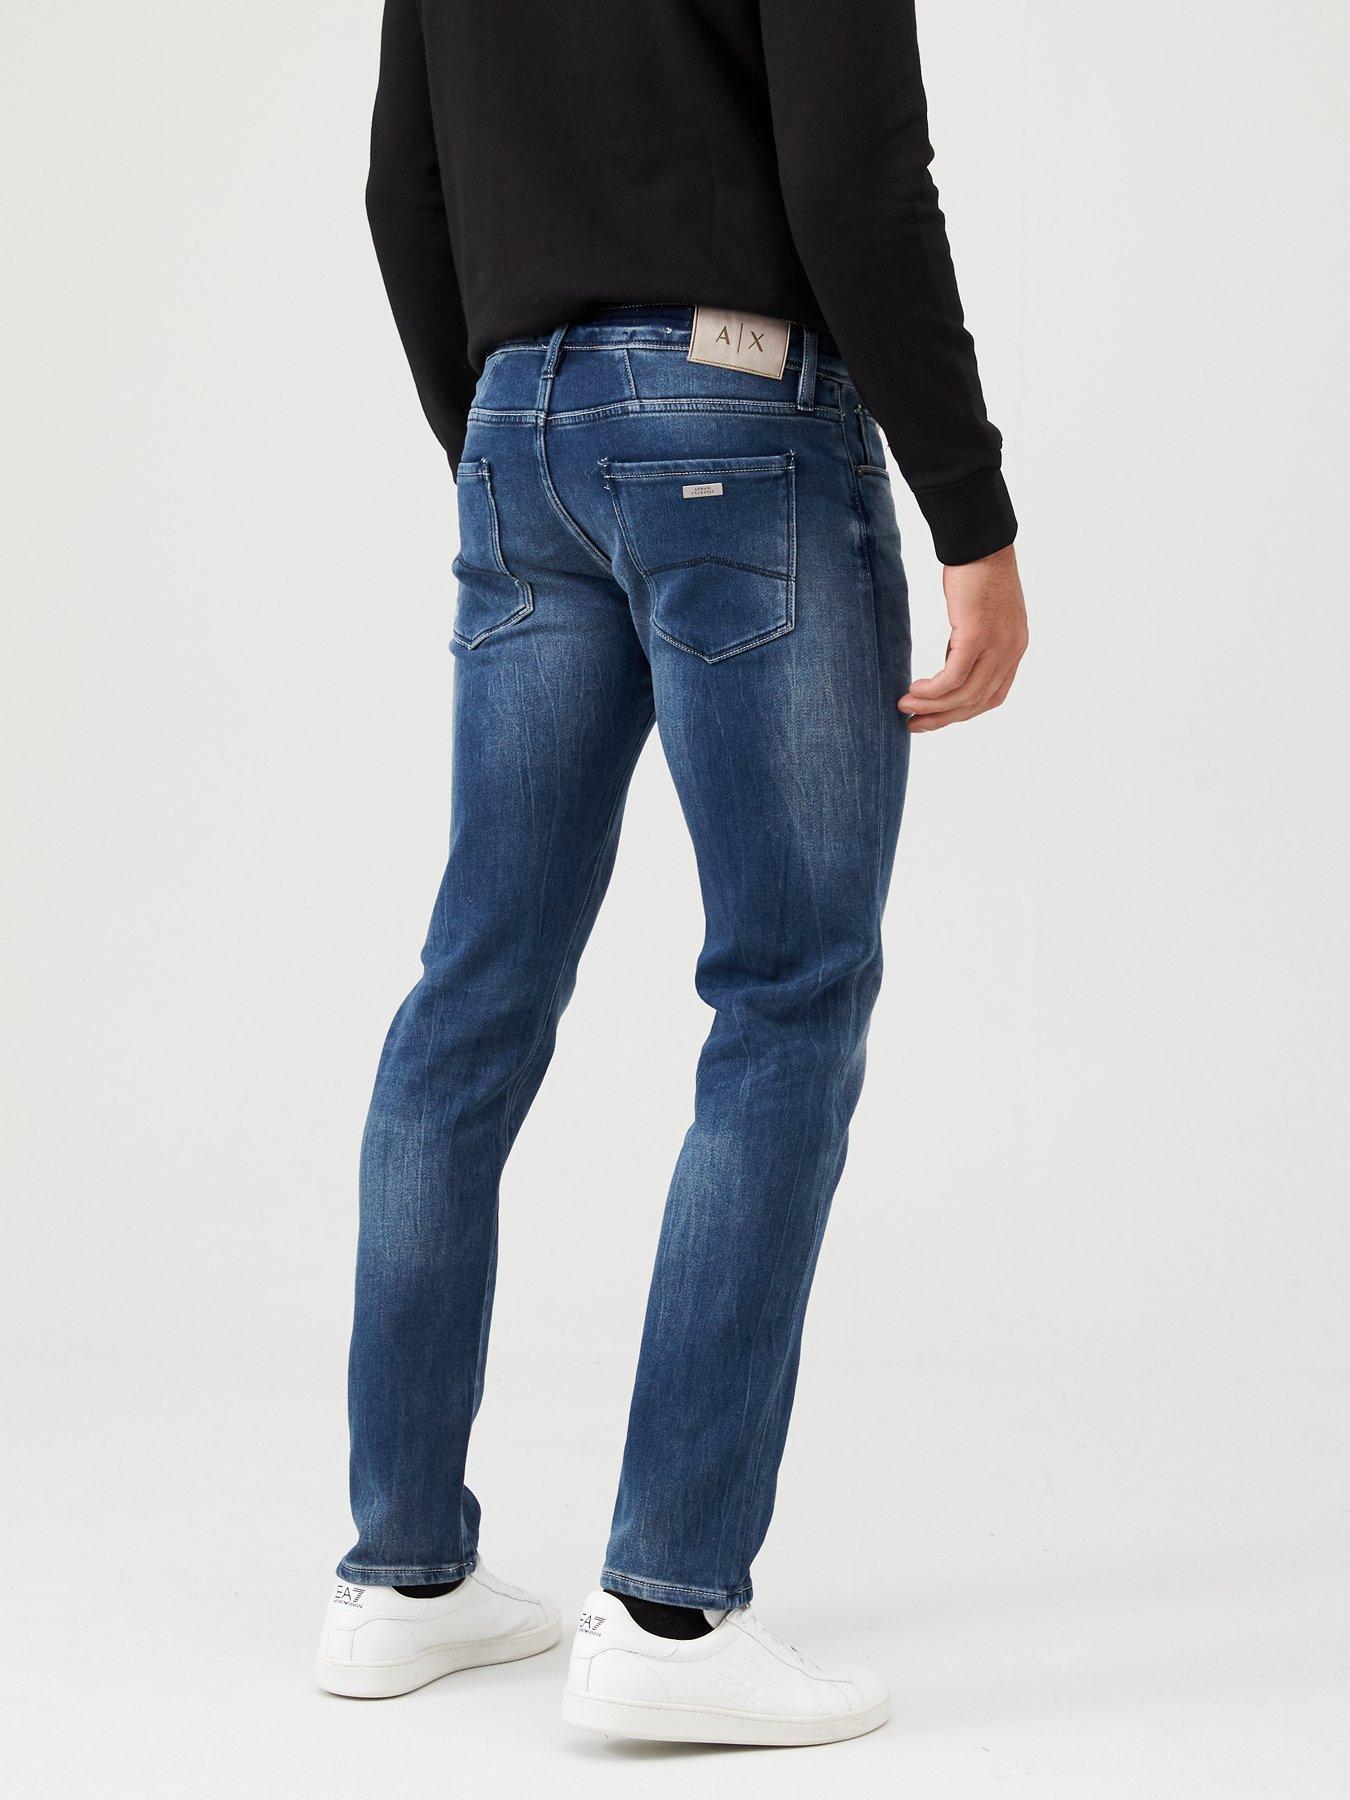 armani jeans clearance